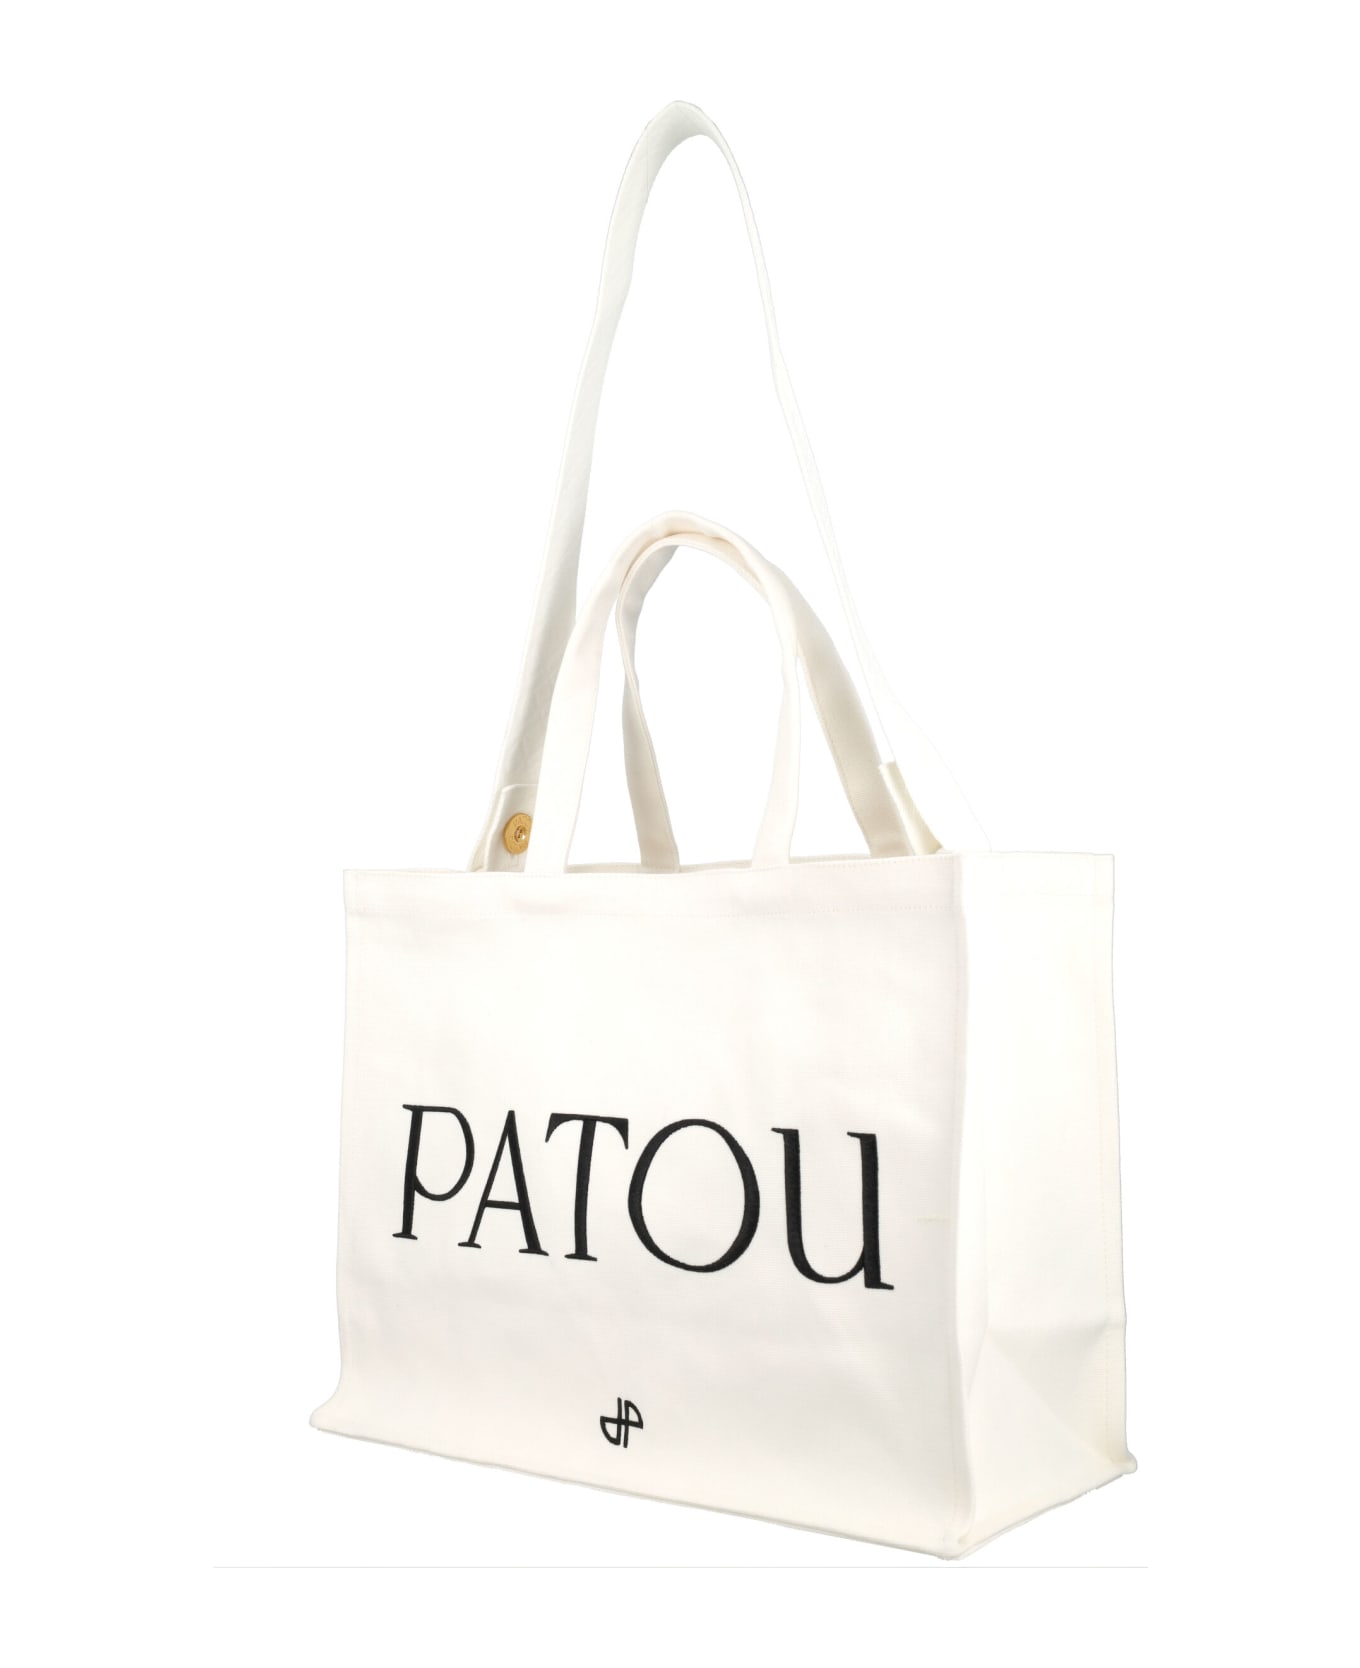 Patou Logo Tote - WHITE